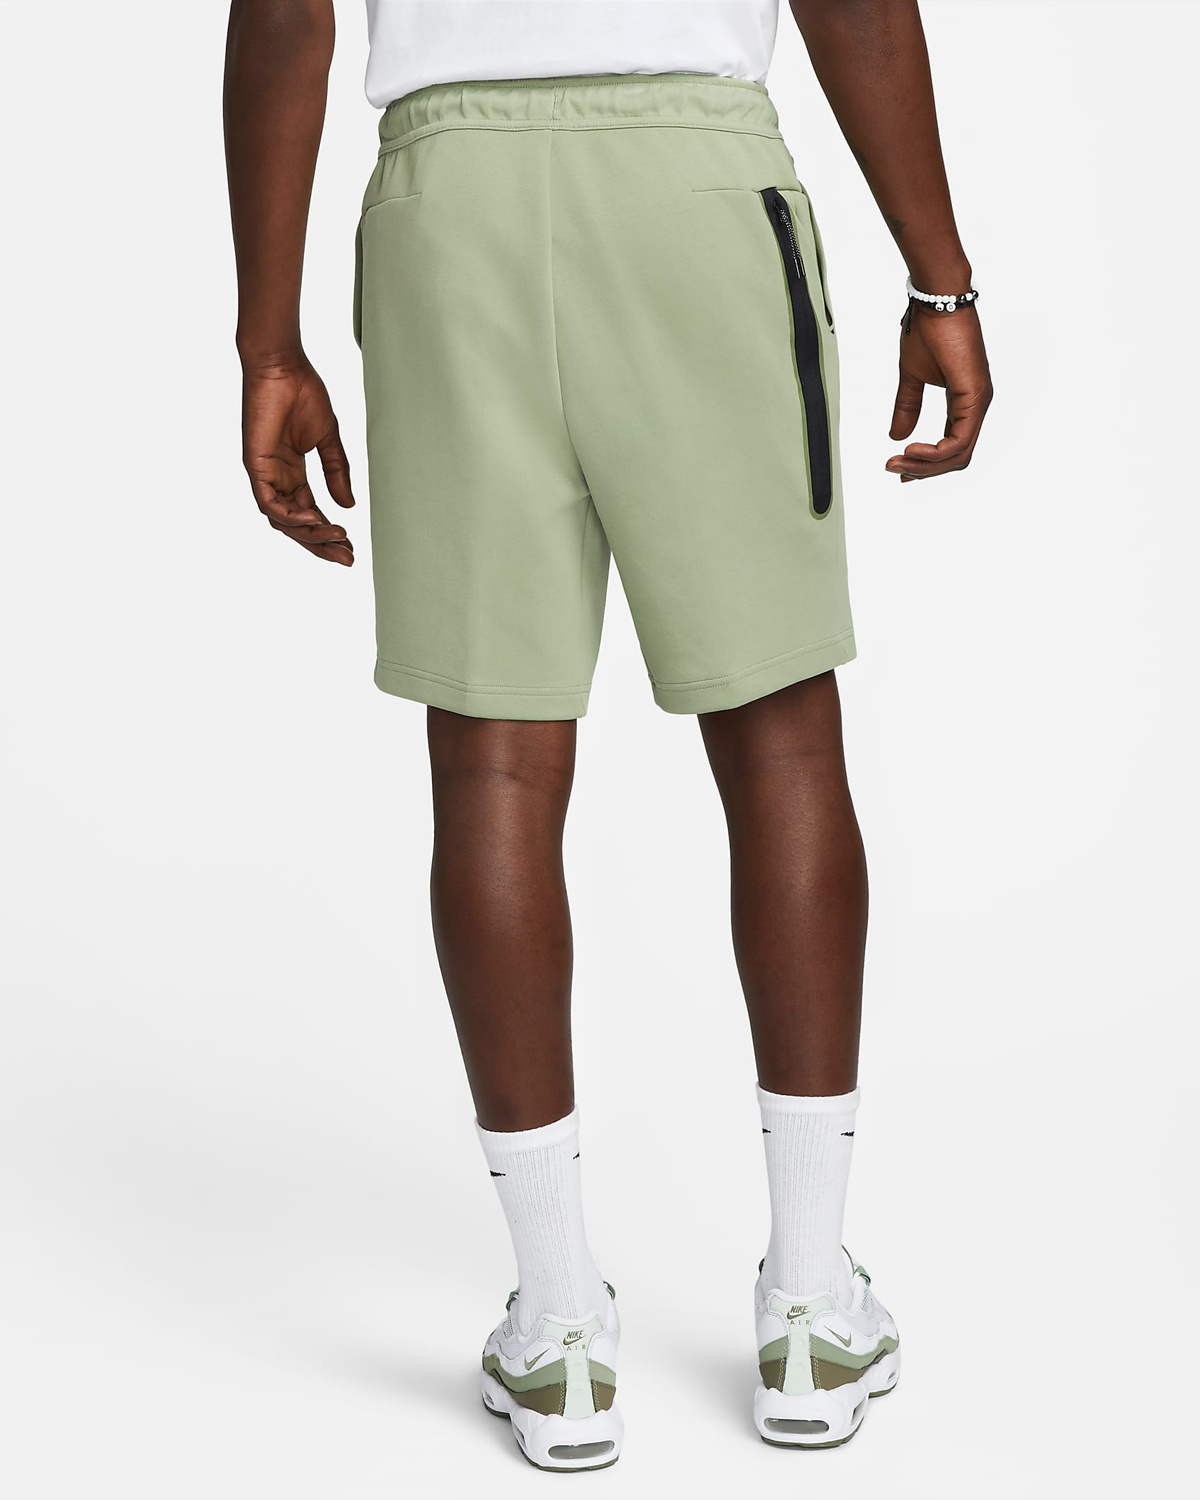 Nike-Tech-Fleece-Graphic-Shorts-Oil-Green-2